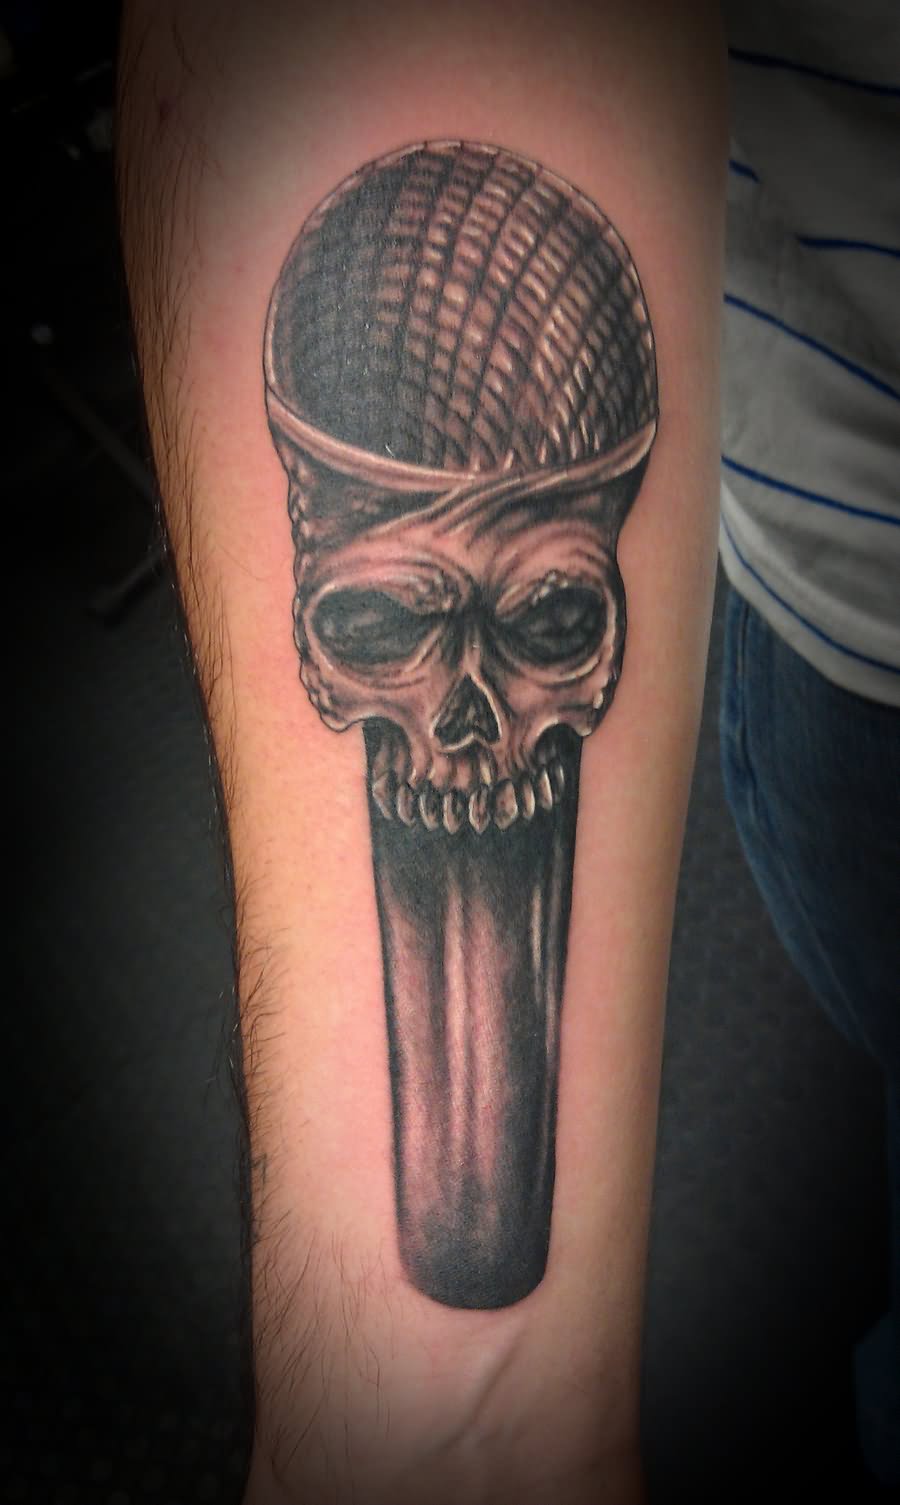 Skull Mic Tattoo On Forearm